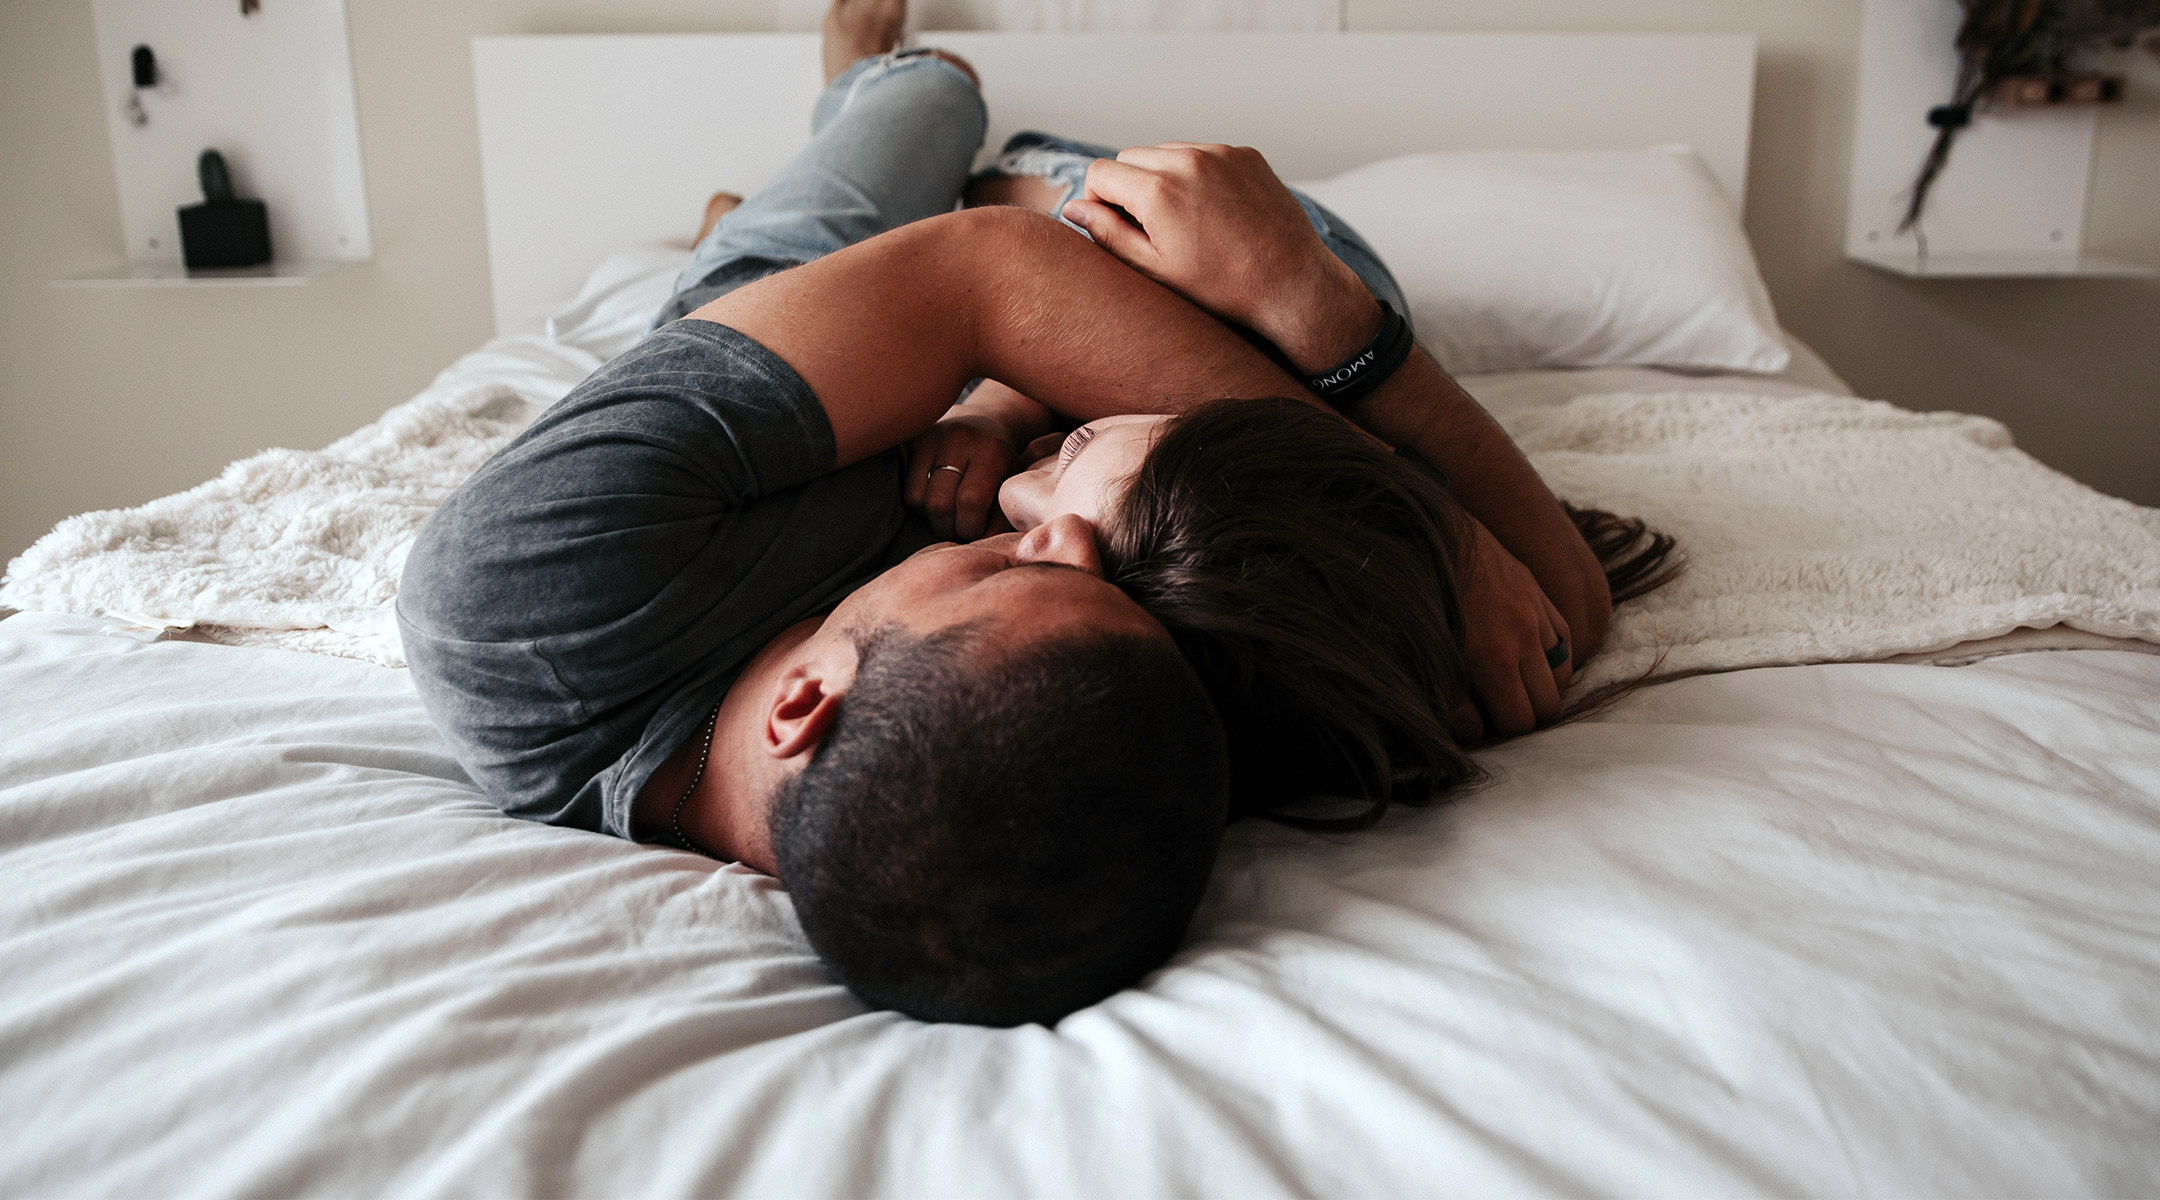 sad couple embraces on bed